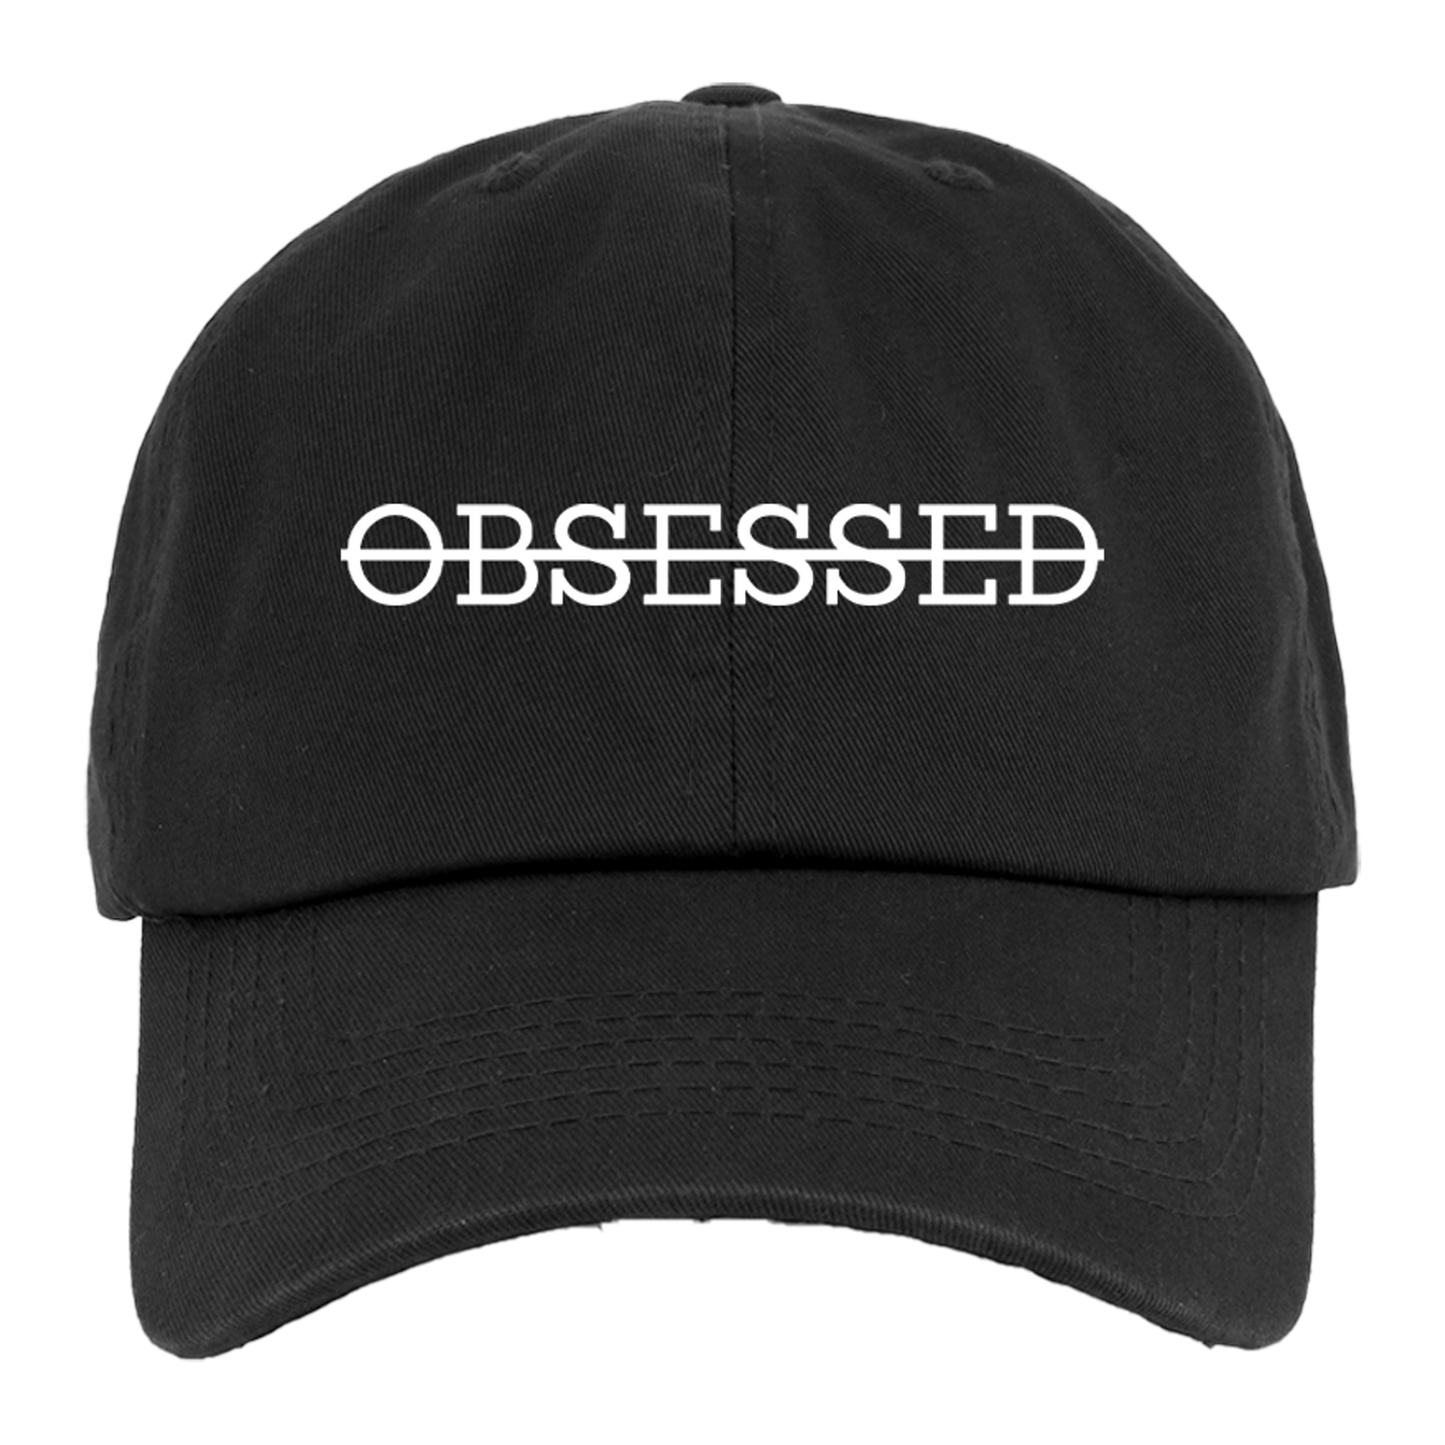 Obsessed Black Hat (Pre-Order)